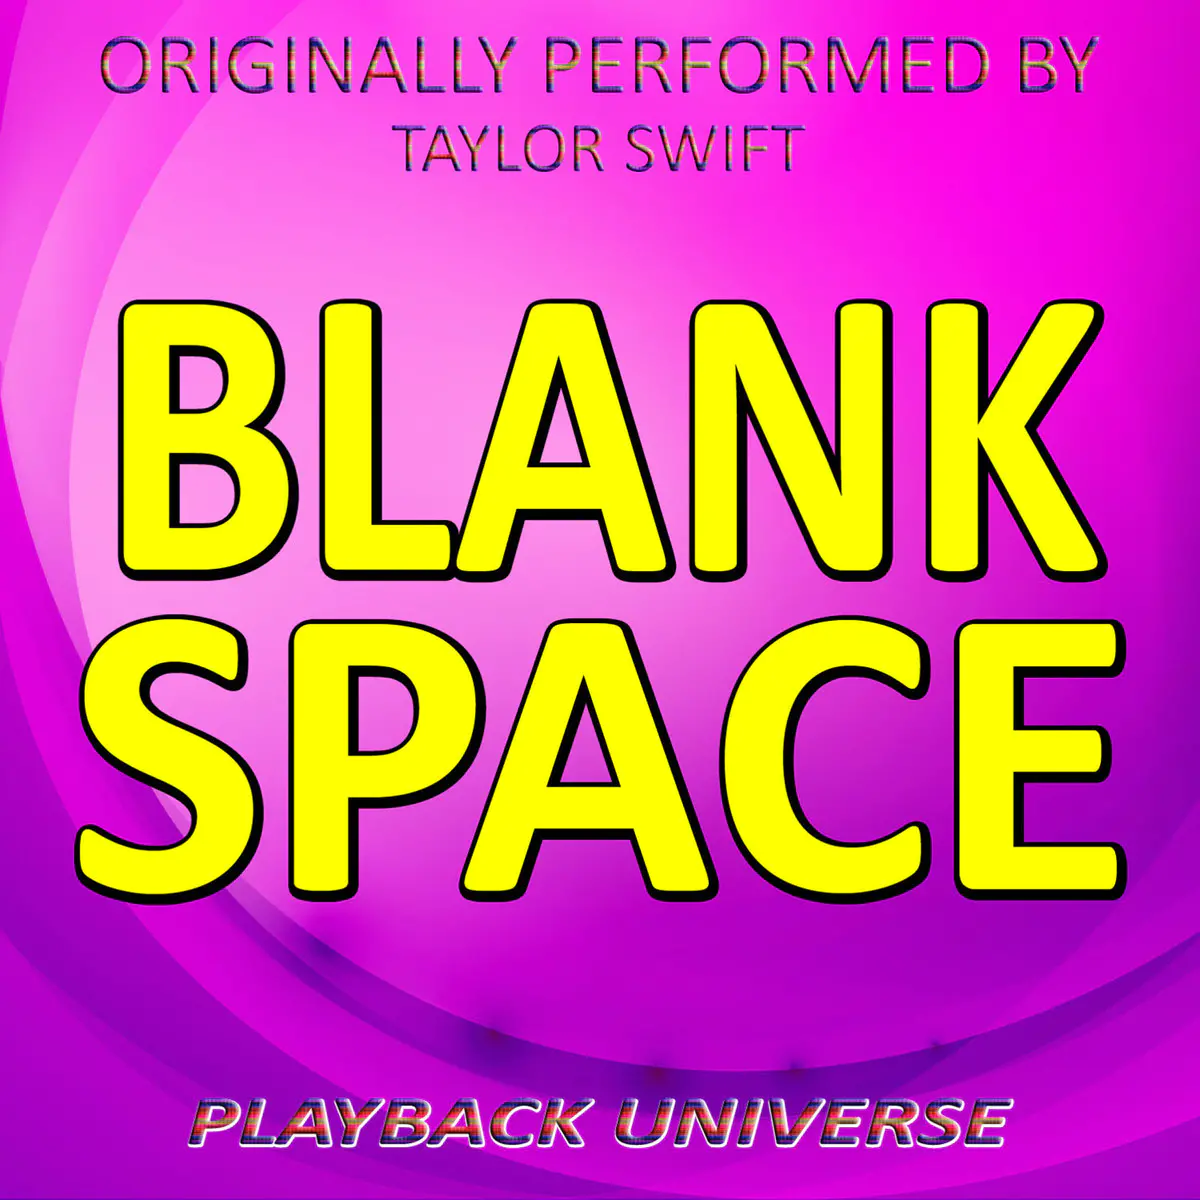 Blank Space Originally Performed By Taylor Swift Lyrics In English Blank Space Originally Performed By Taylor Swift Blank Space Originally Performed By Taylor Swift Song Lyrics In English Free Online On Gaana Com